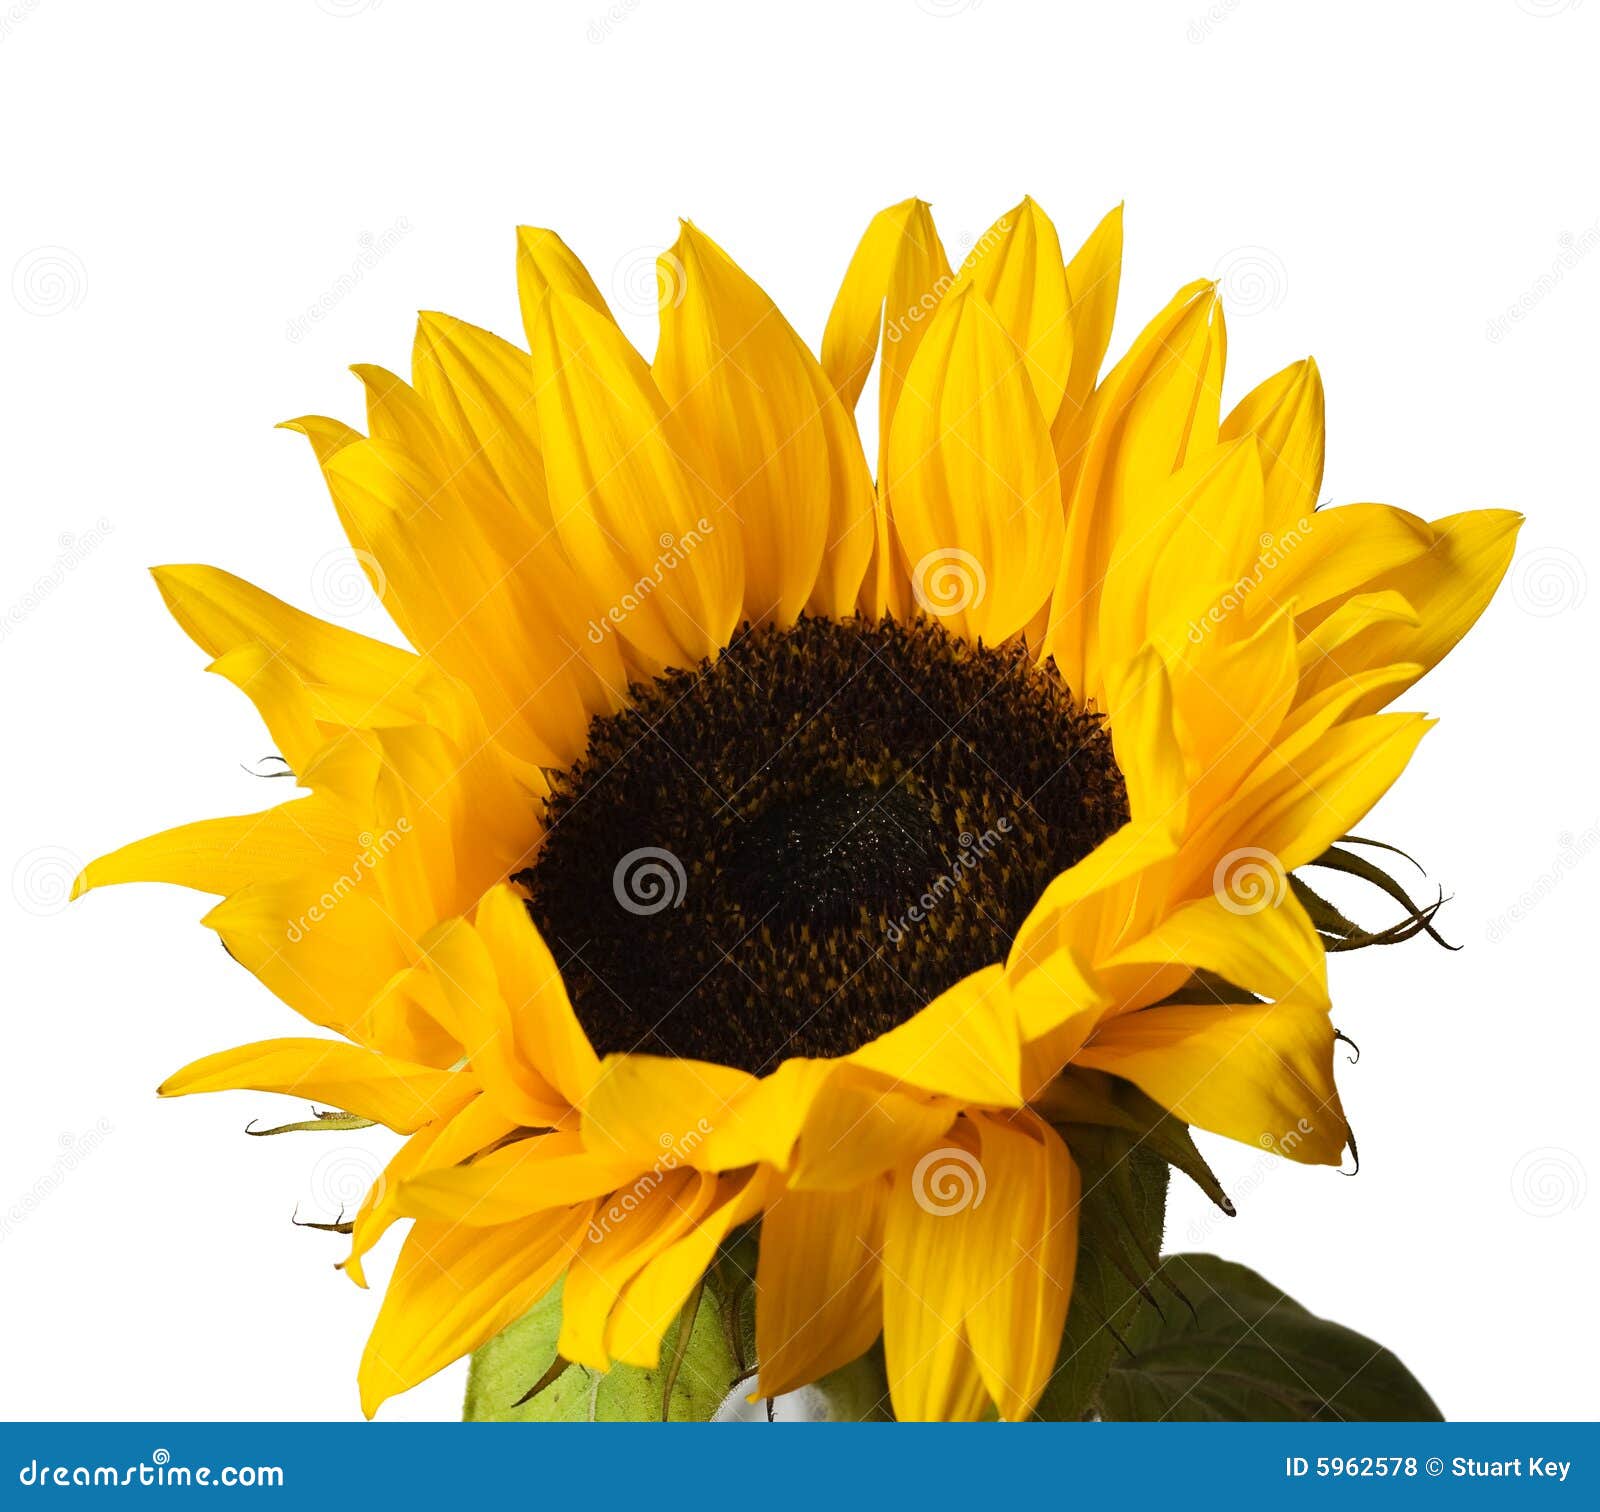 Sunflower Head Royalty Free Stock Photos - Image: 5962578